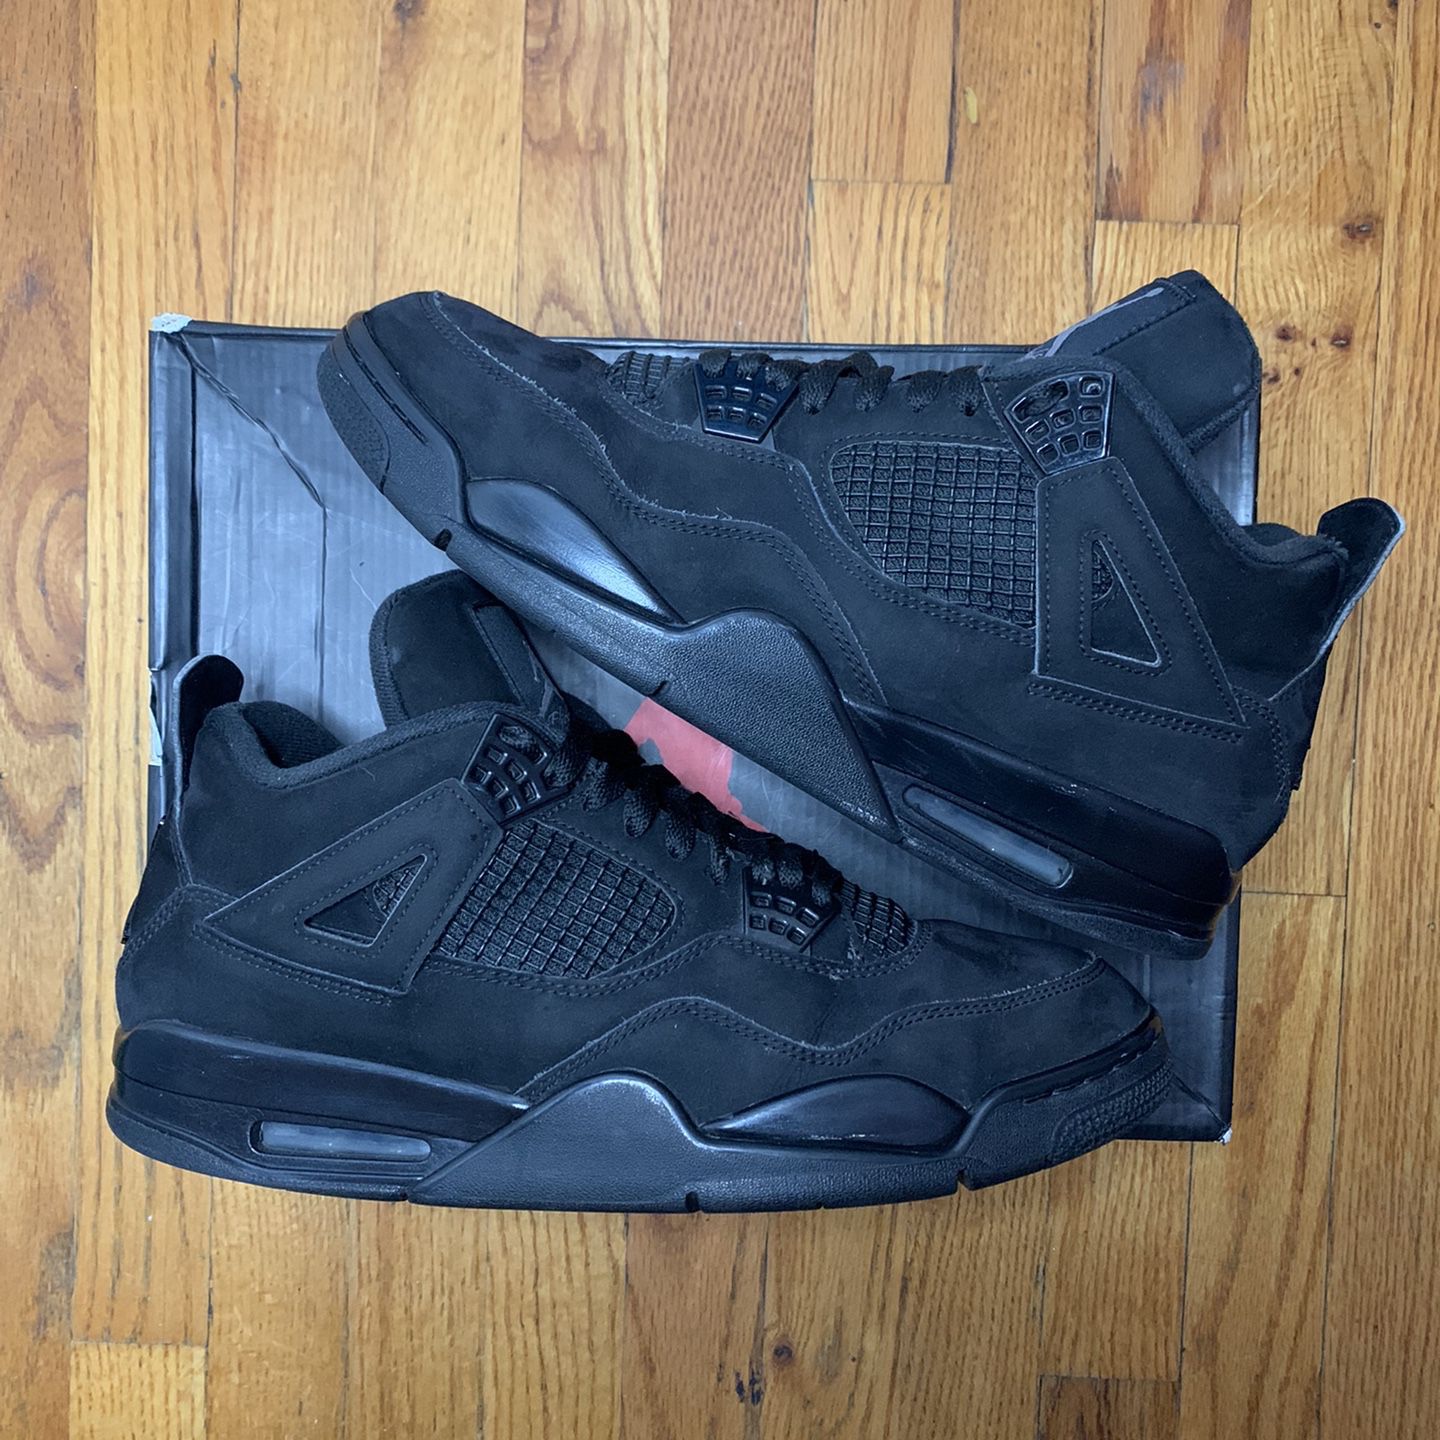 Jordan 4 Black Cat (2020) *Worn Once* Size 11 $600